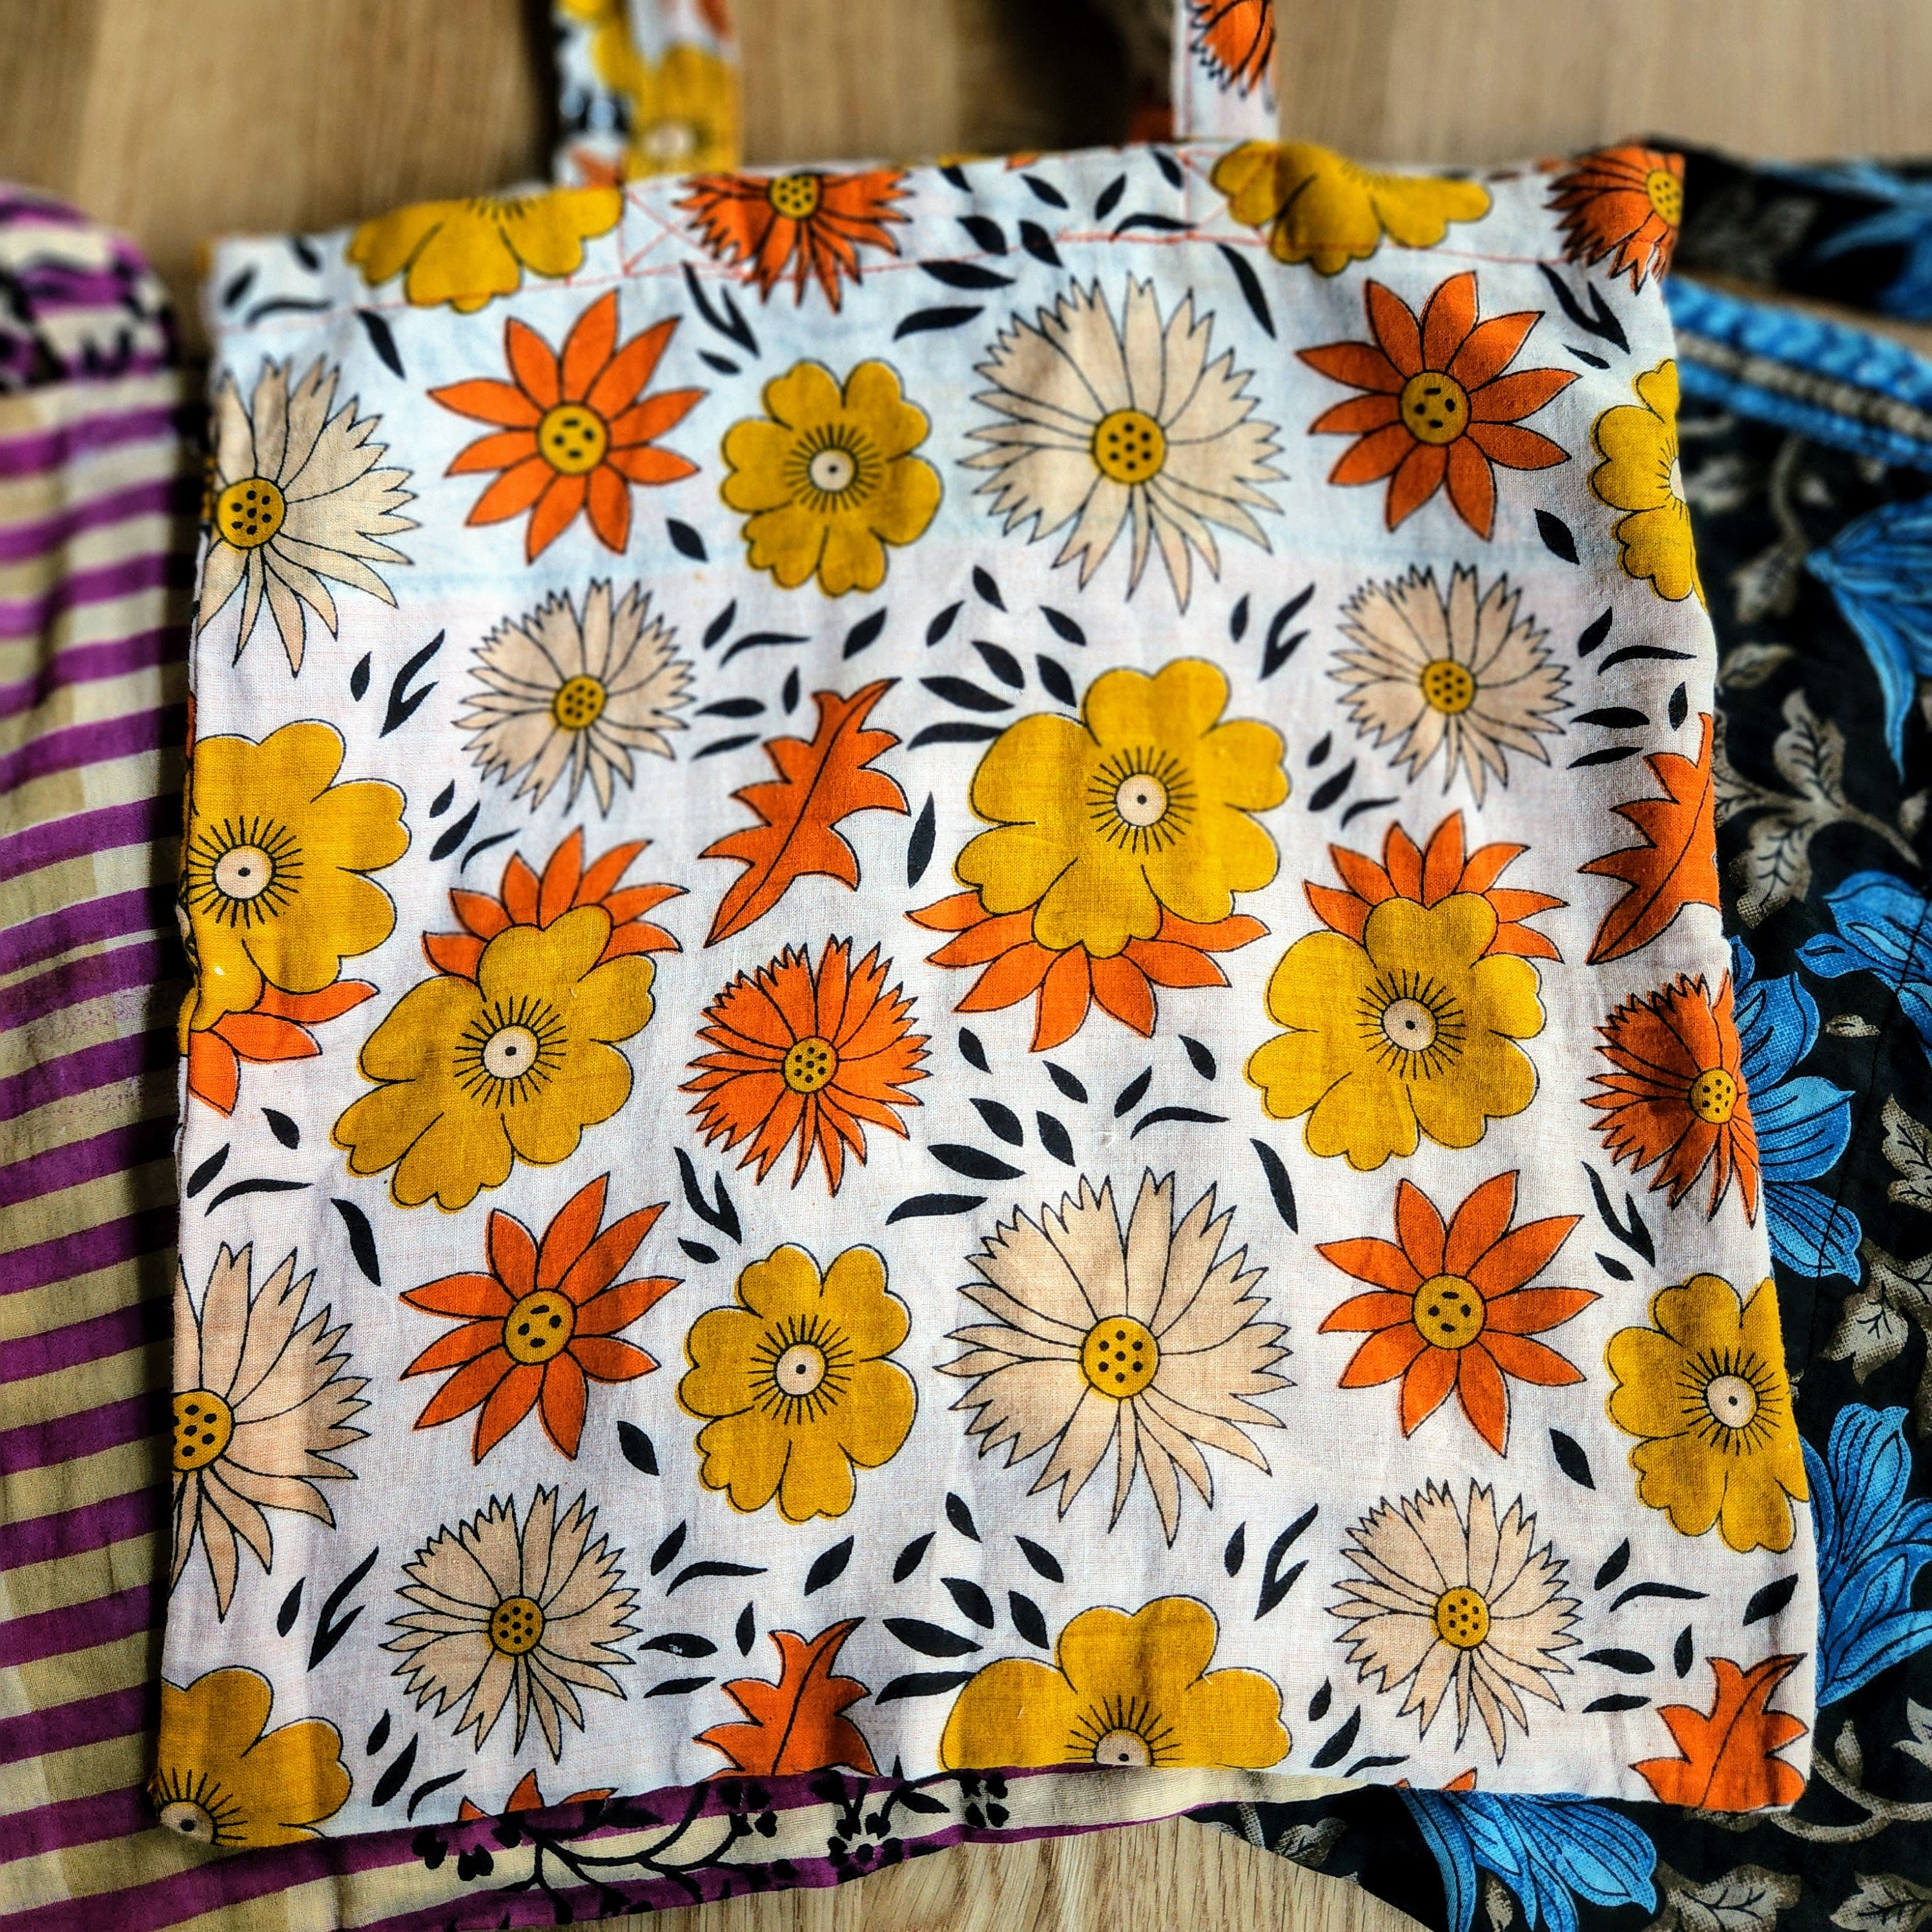 women potli bags/designer bags / wedding bag/ sari matching bag pack of 8